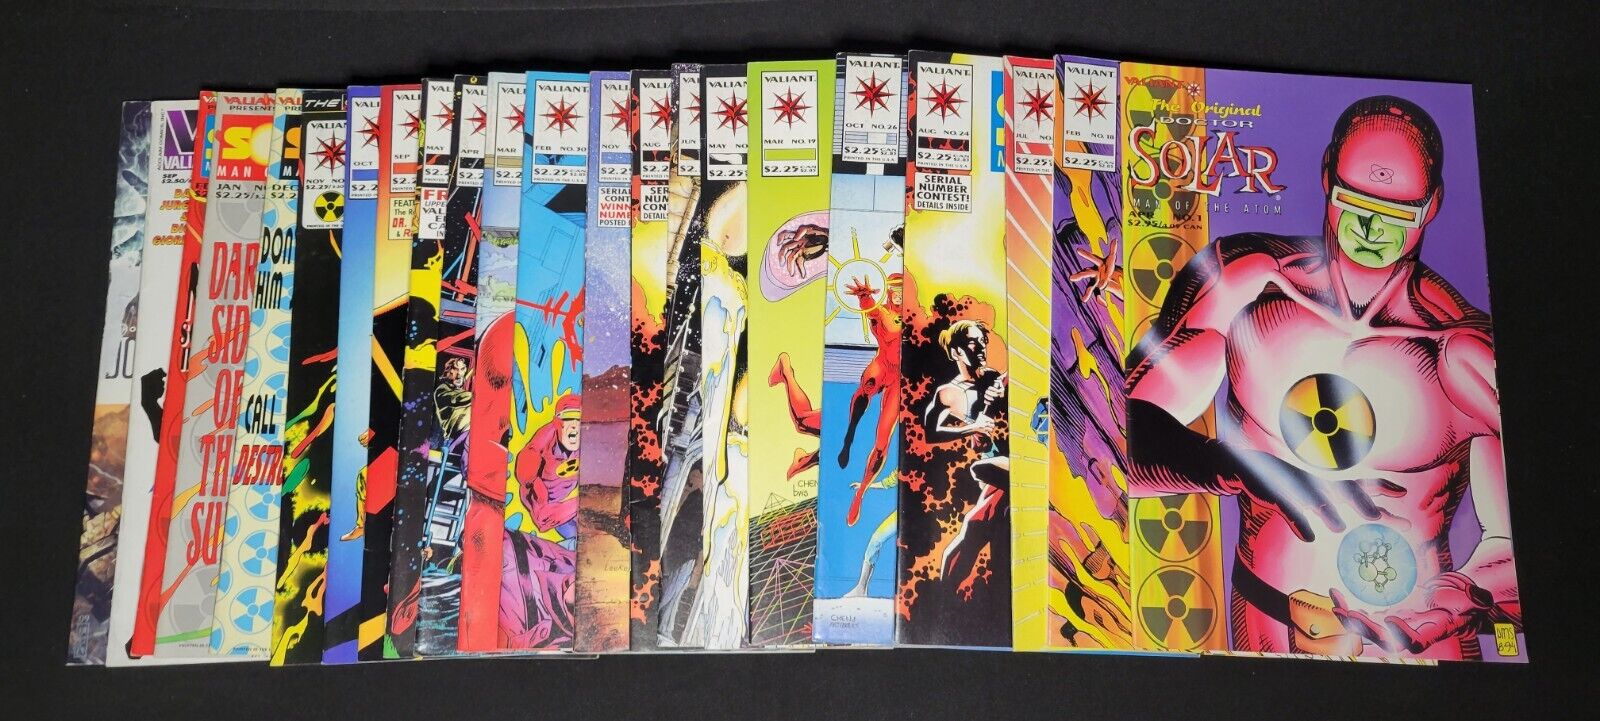 Solar Man of the Atom 23 issue comic lot, Valiant Comics (1993+) Keys Included. 